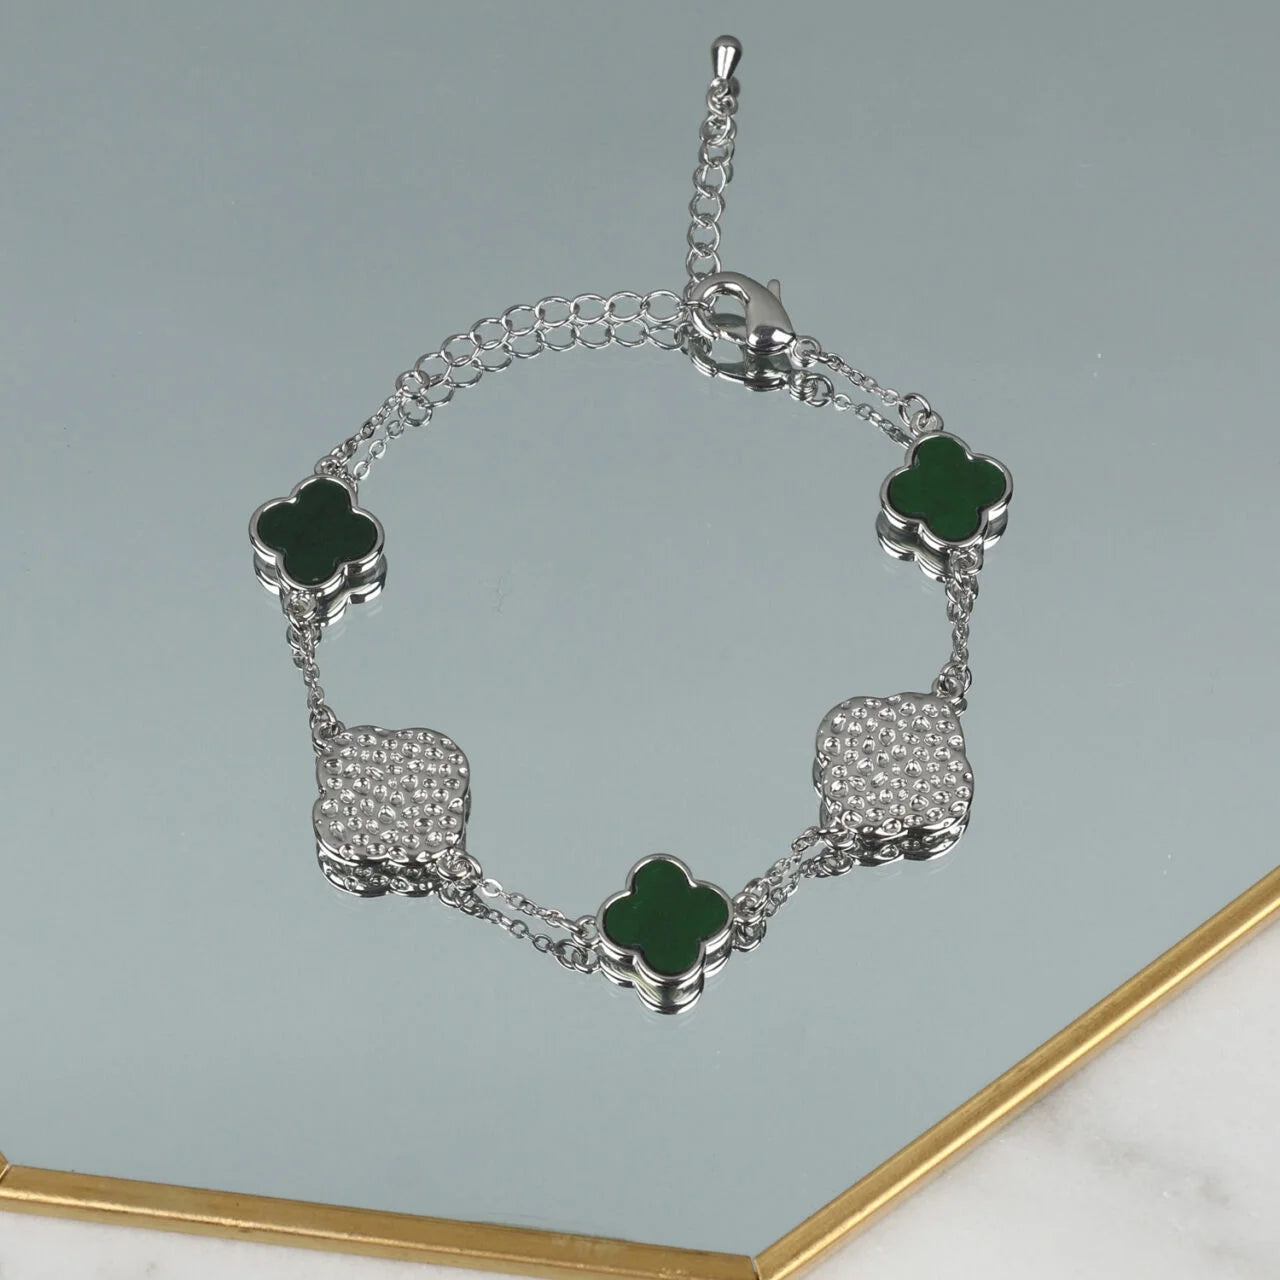 Fabulous Gifts Jewellery Bracelet Double Clover Green Silver by Weirs of Baggot Street